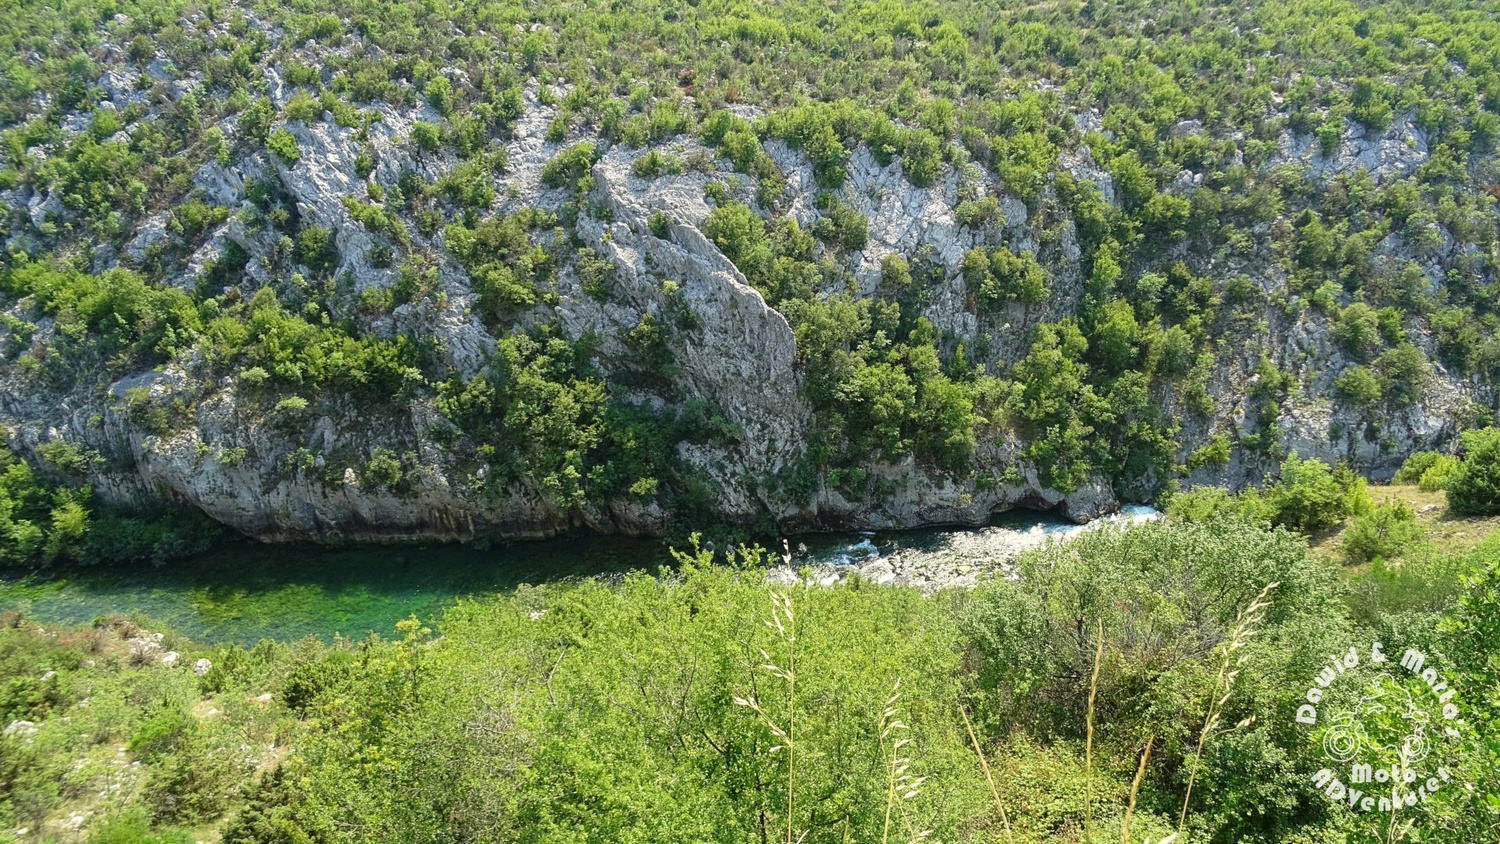 The Cetina River canyon bottom